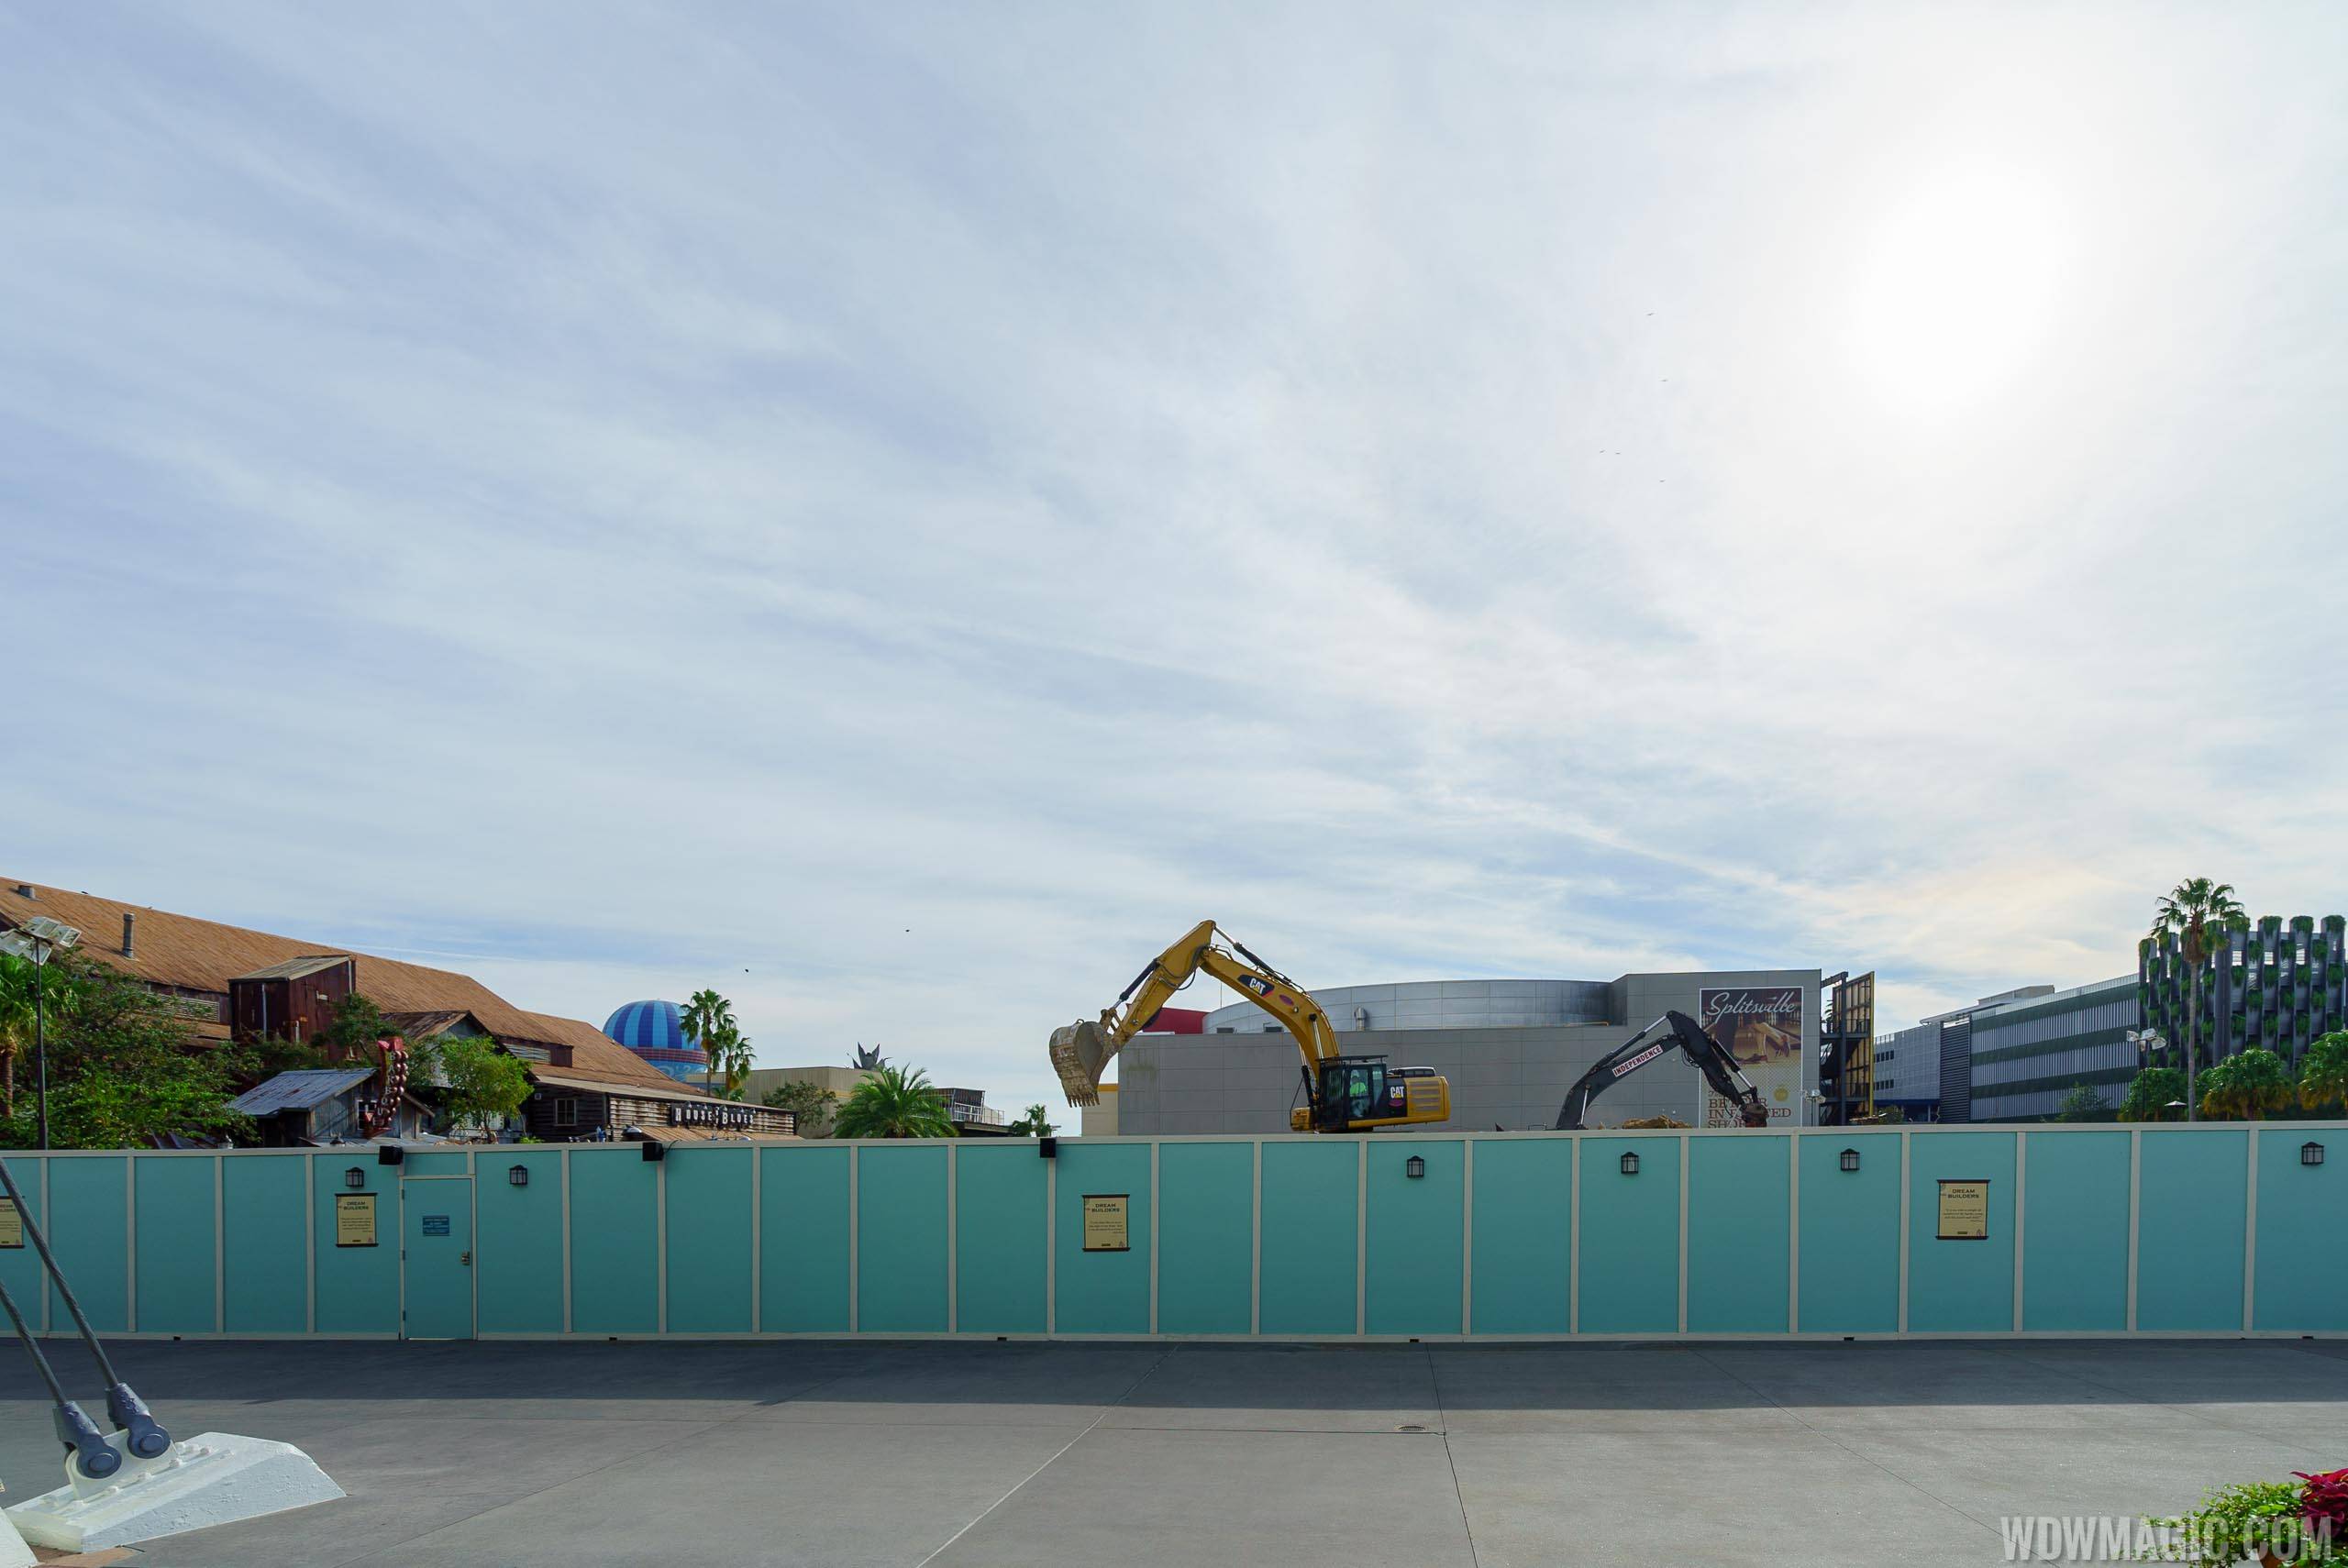 Disney Quest demolition completed